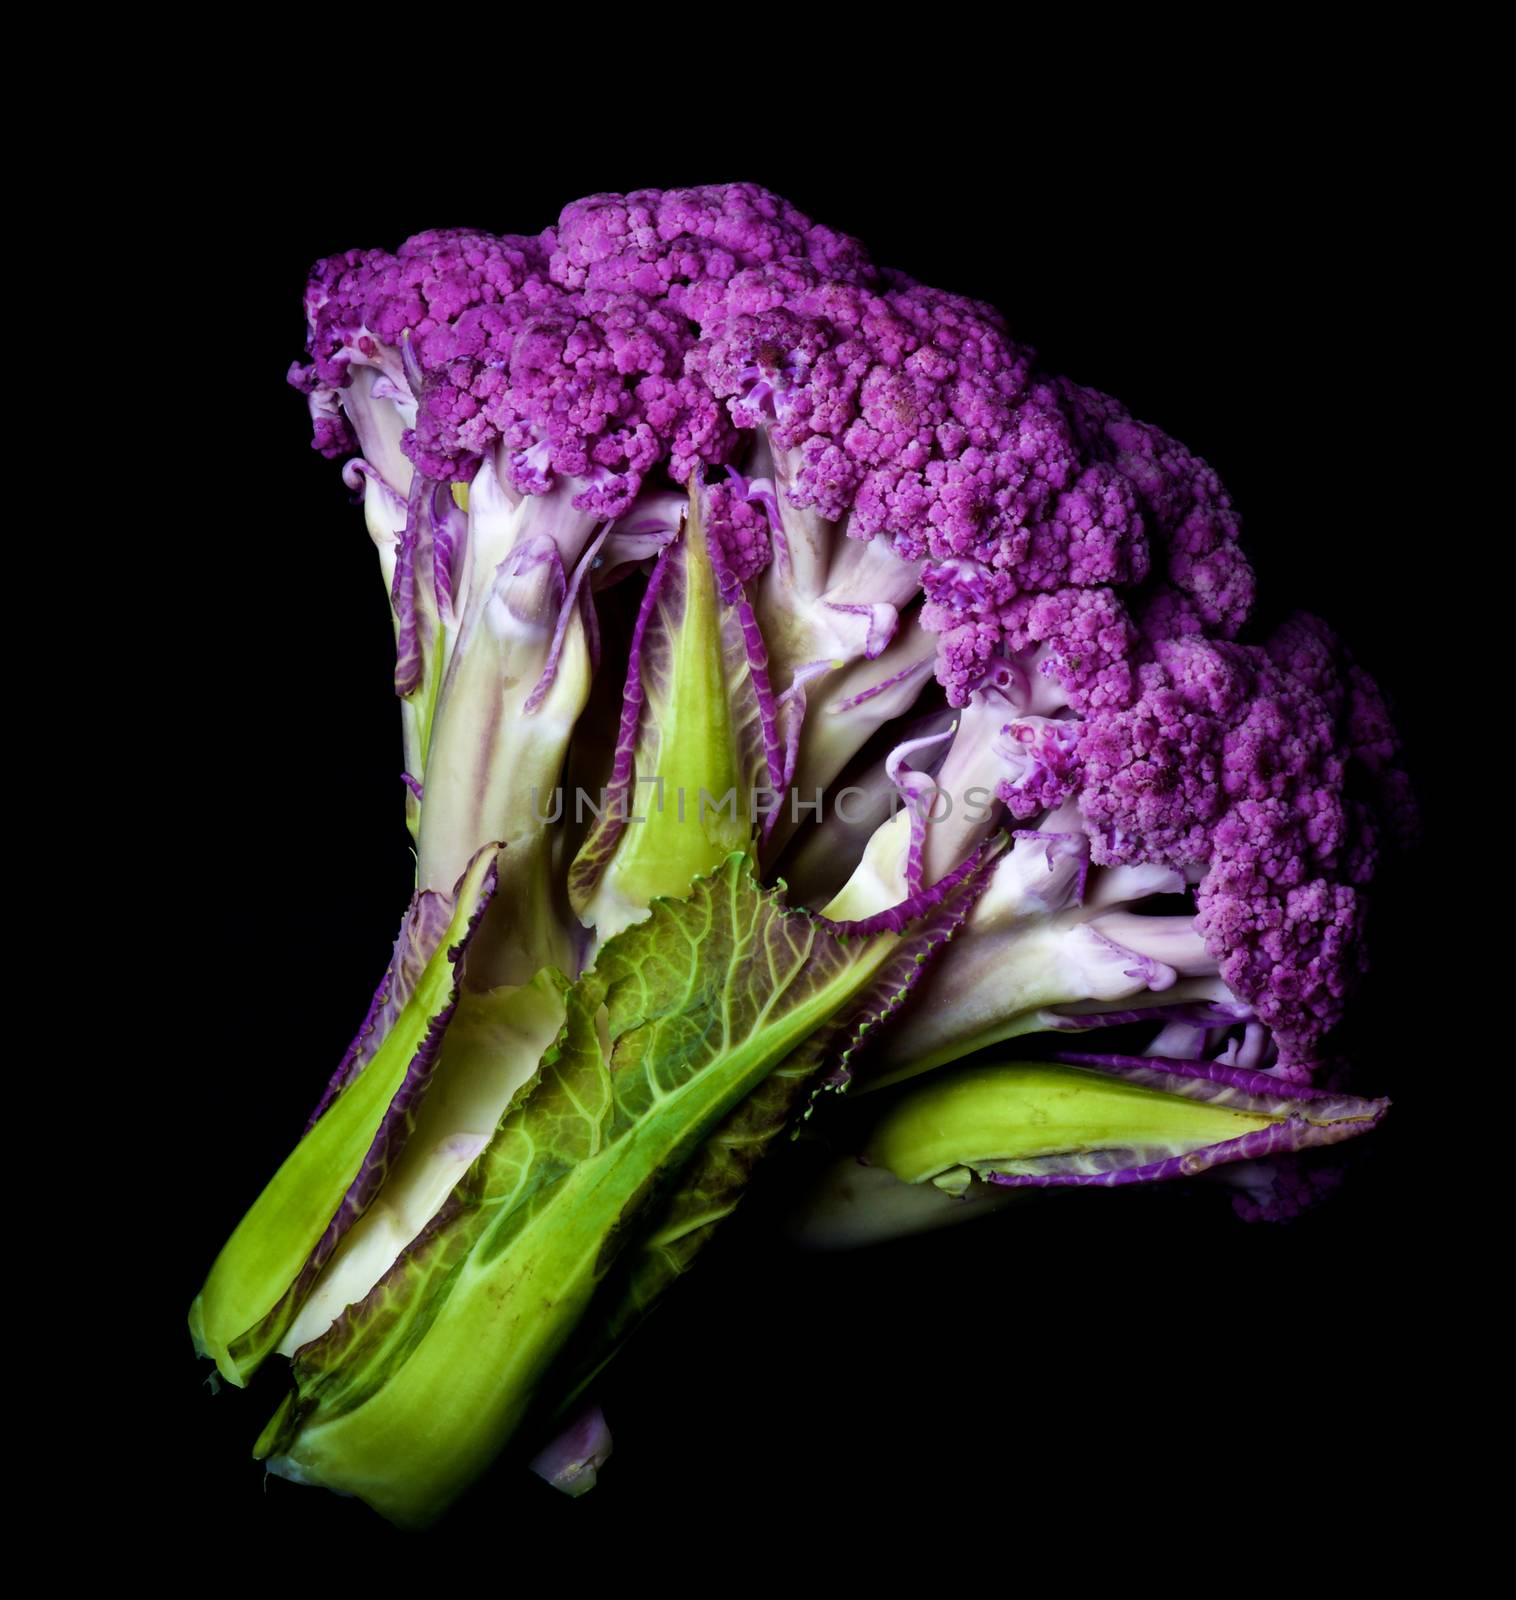 Fresh Purple Cauliflower by zhekos